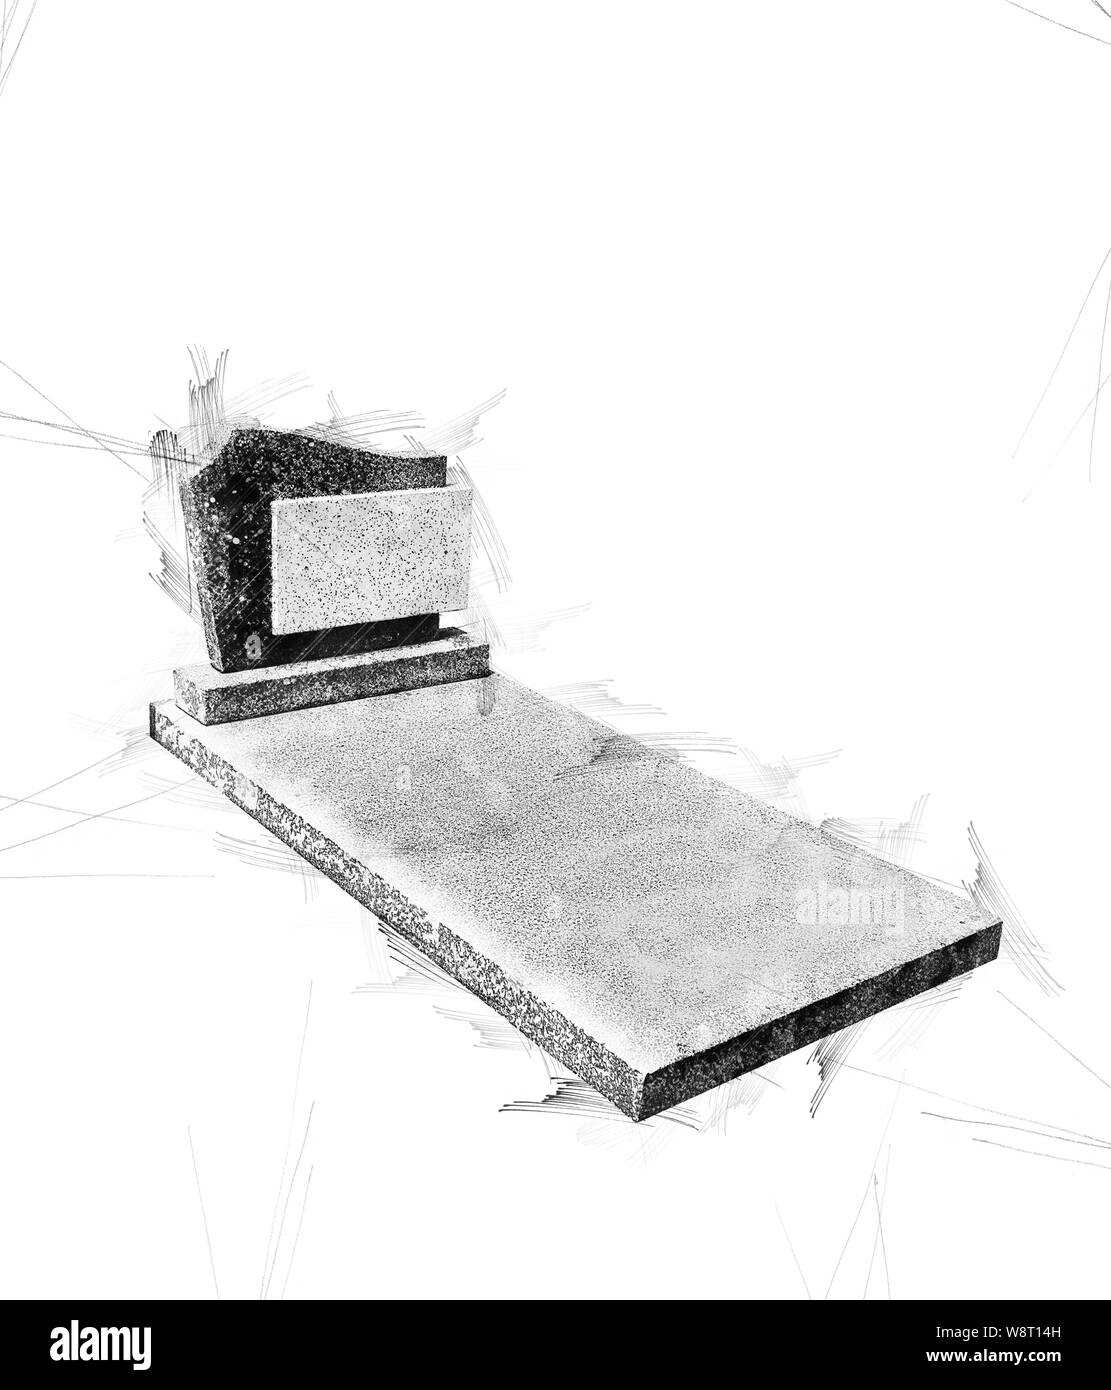 Illustration sketch of a single grave stone Stock Photo